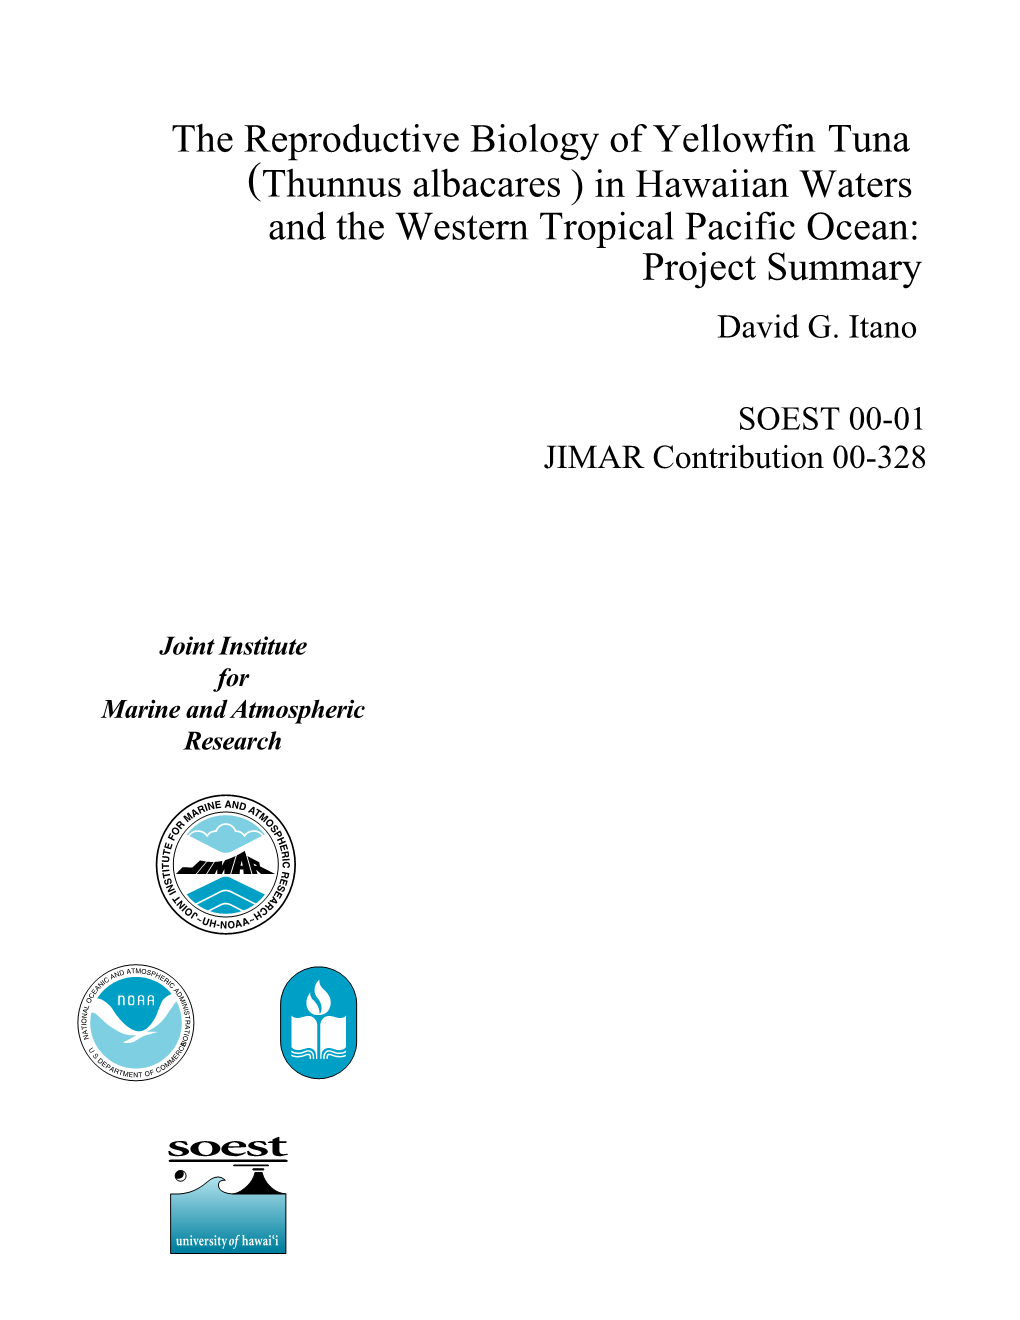 The Reproductive Biology of Yellowfin Tuna (Thunnus Albacares) in Hawaiian Waters